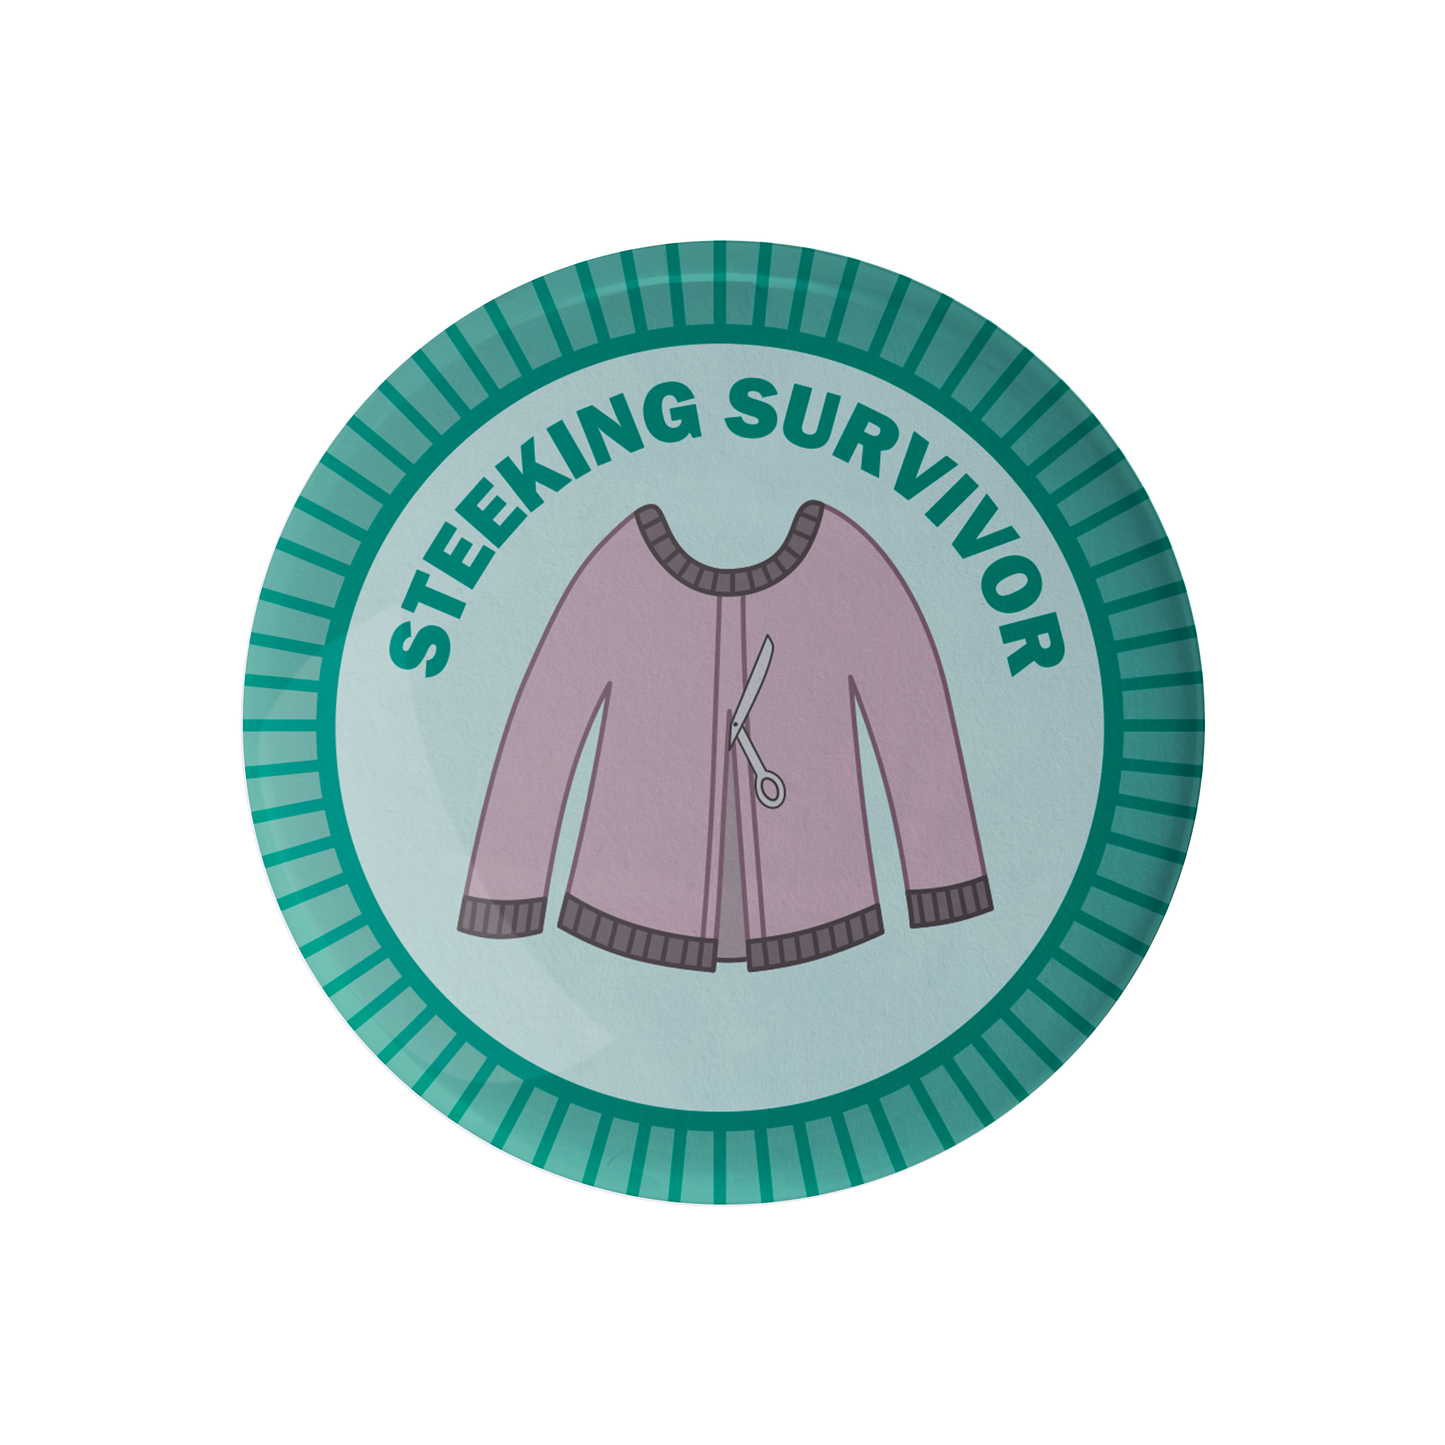 Steeking Survivor Knitting Merit Badge